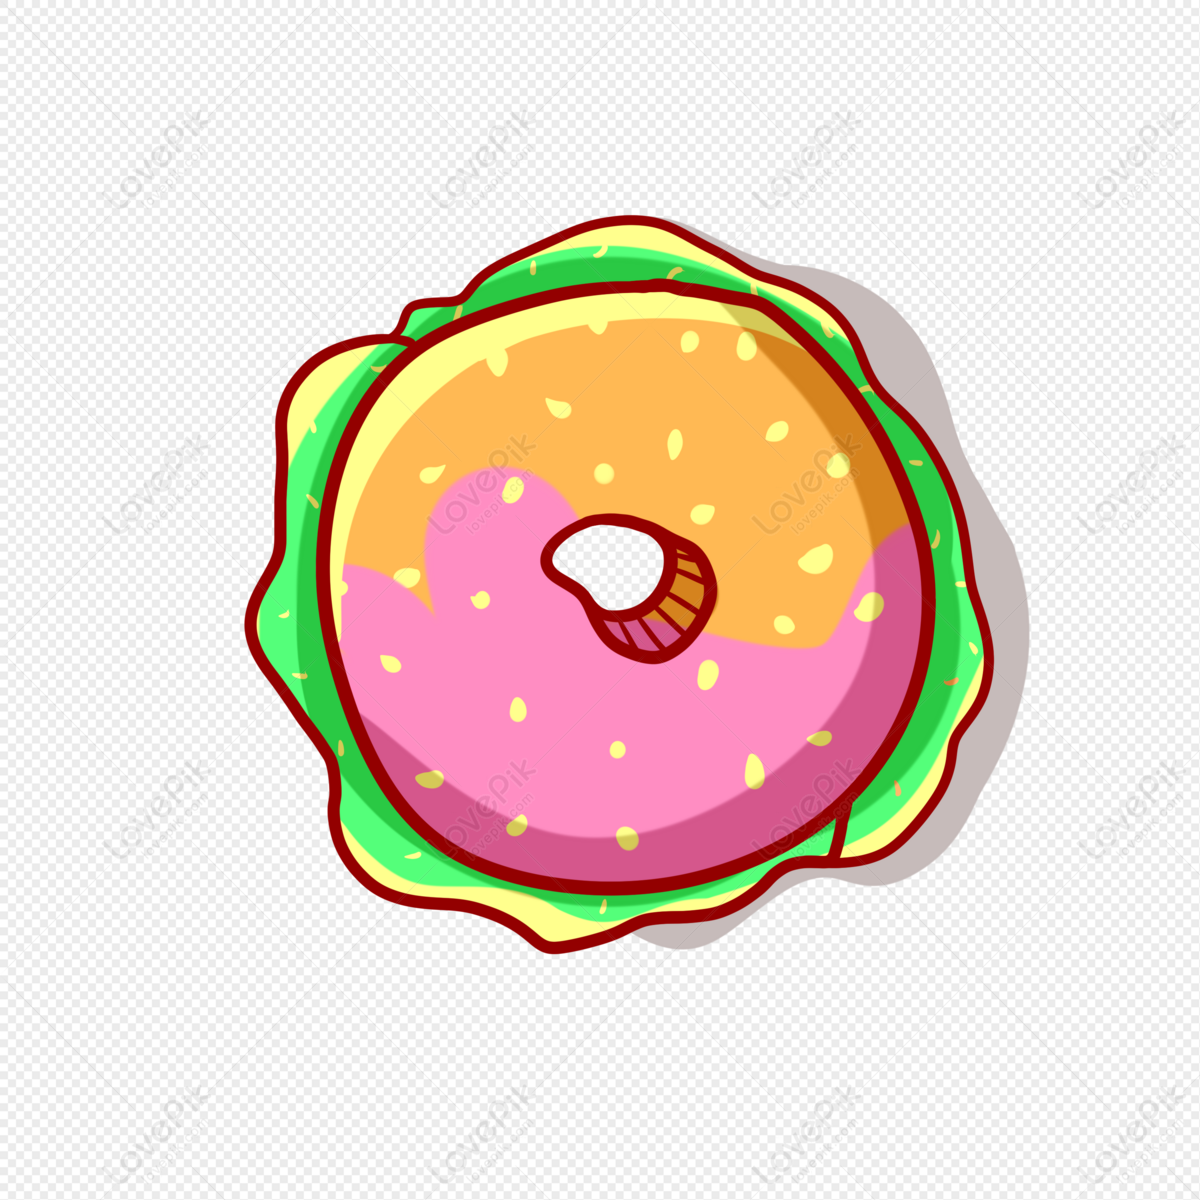 Cartoon Food Donut Illustration PNG Transparent Image And Clipart Image For  Free Download - Lovepik | 401355357